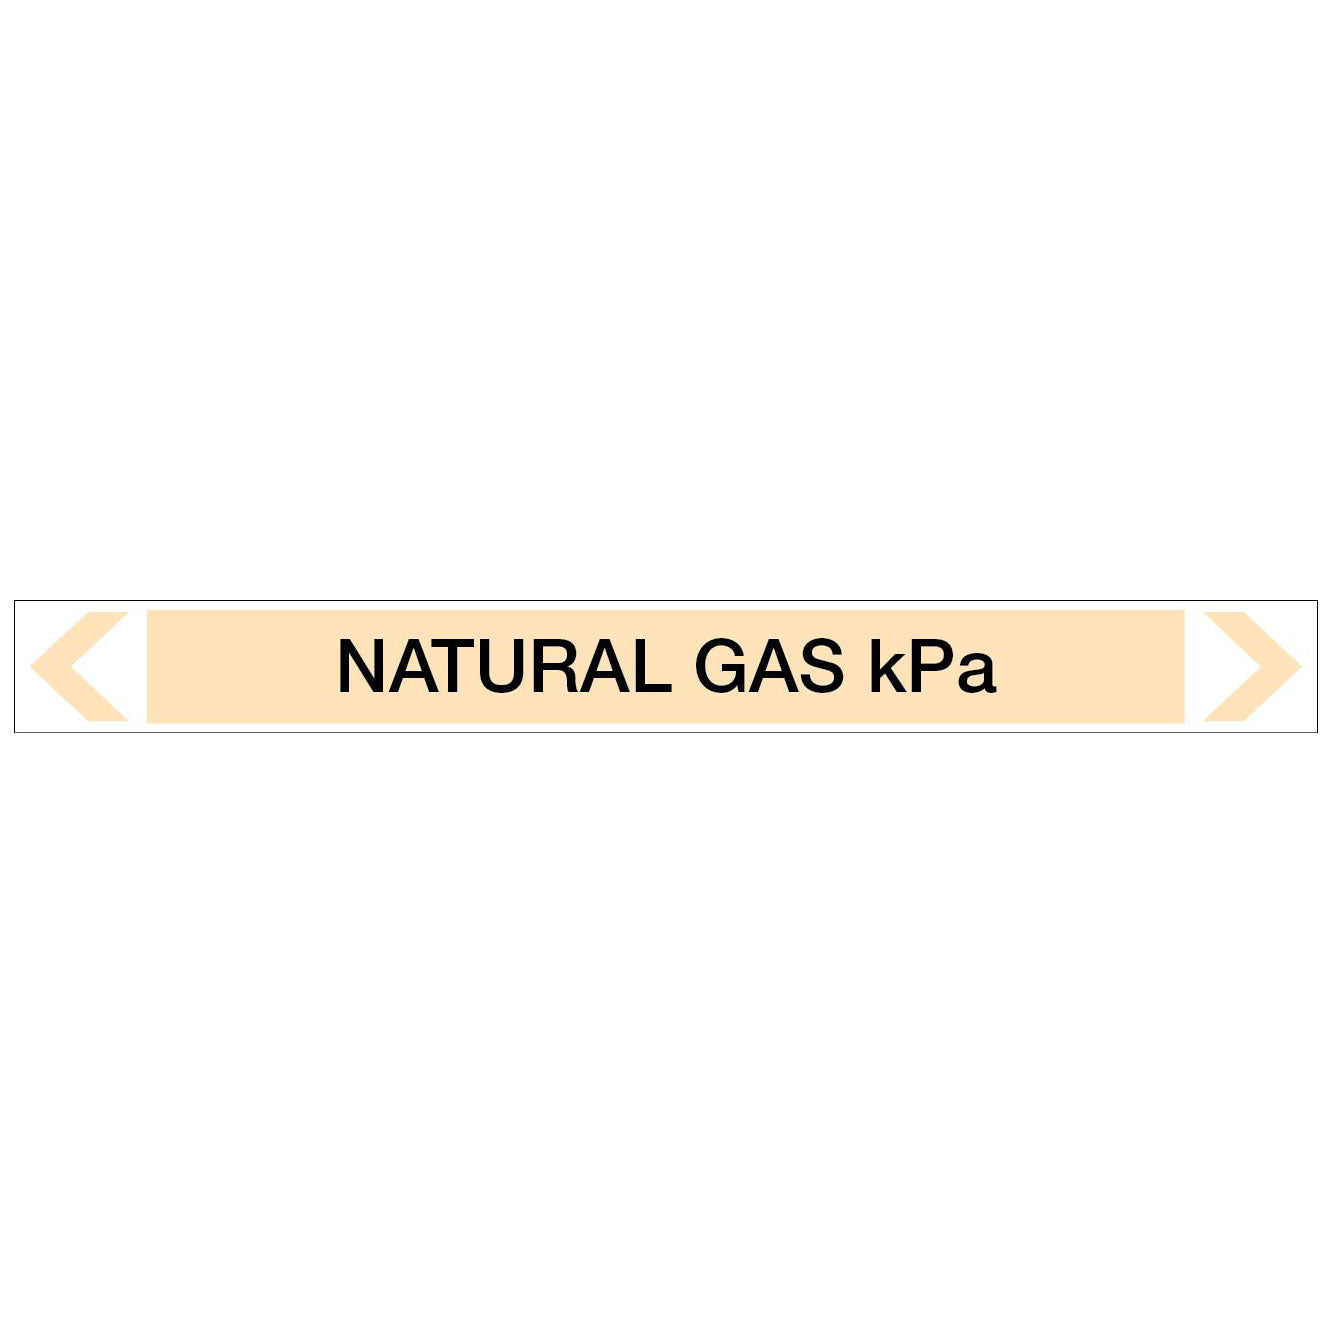 Gases - Natural Gas kPa - Pipe Marker Sticker